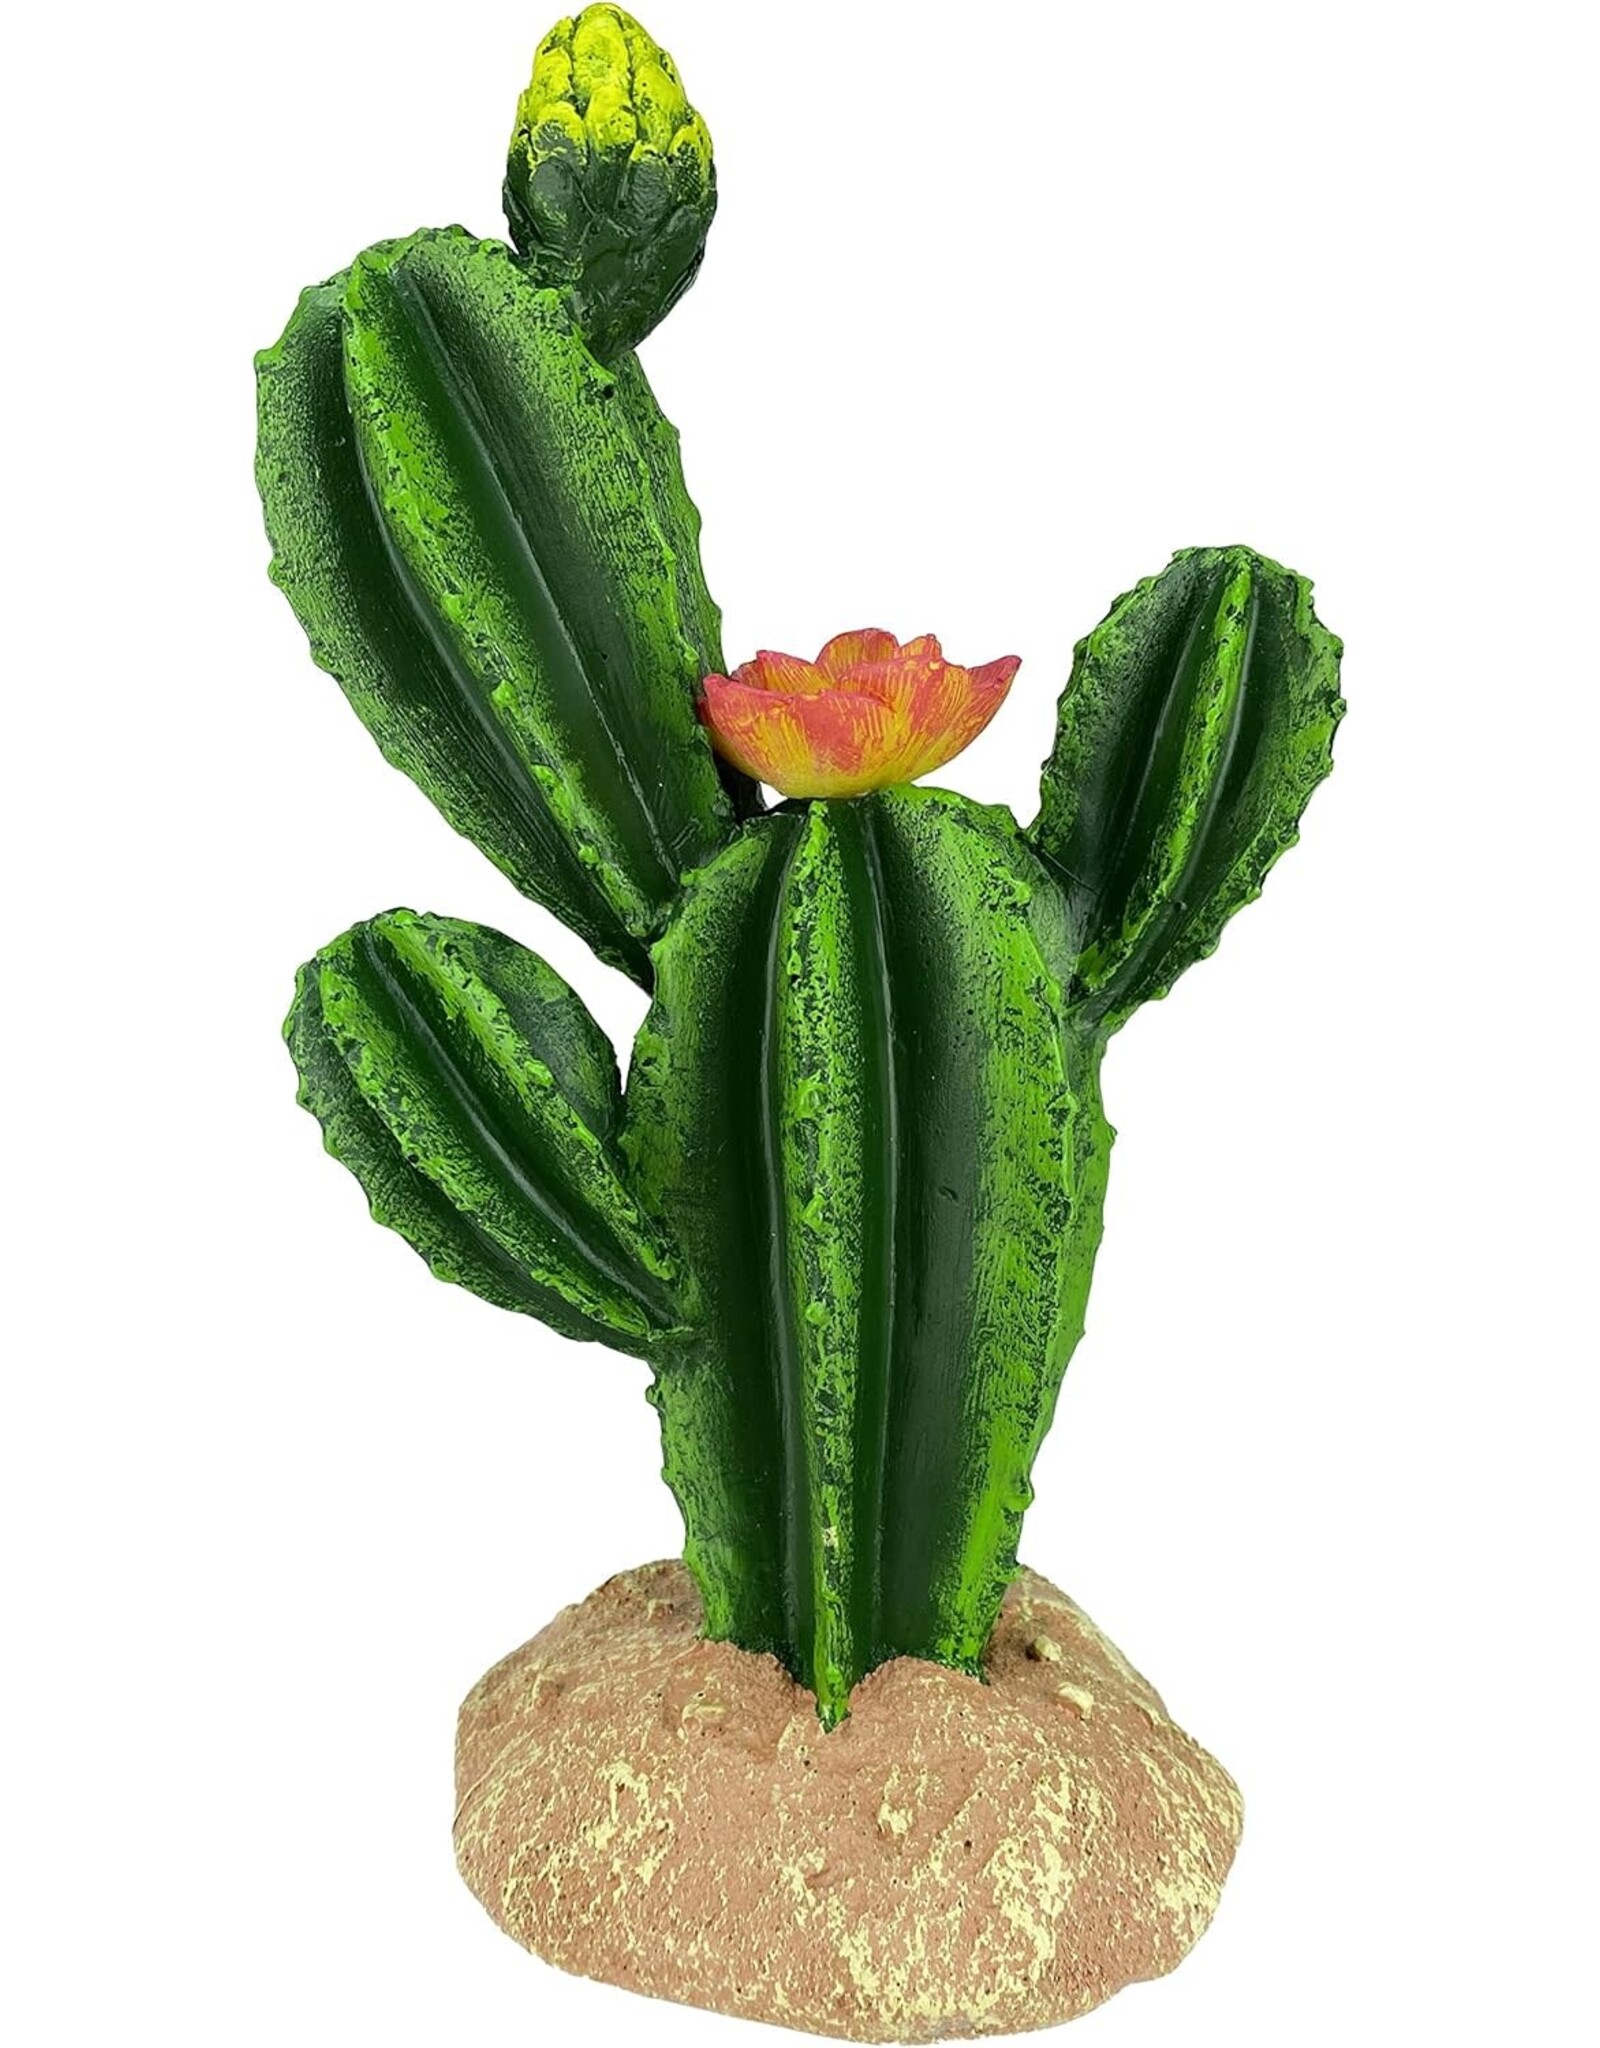 Cactus w/ Flower - 9 in Komodo